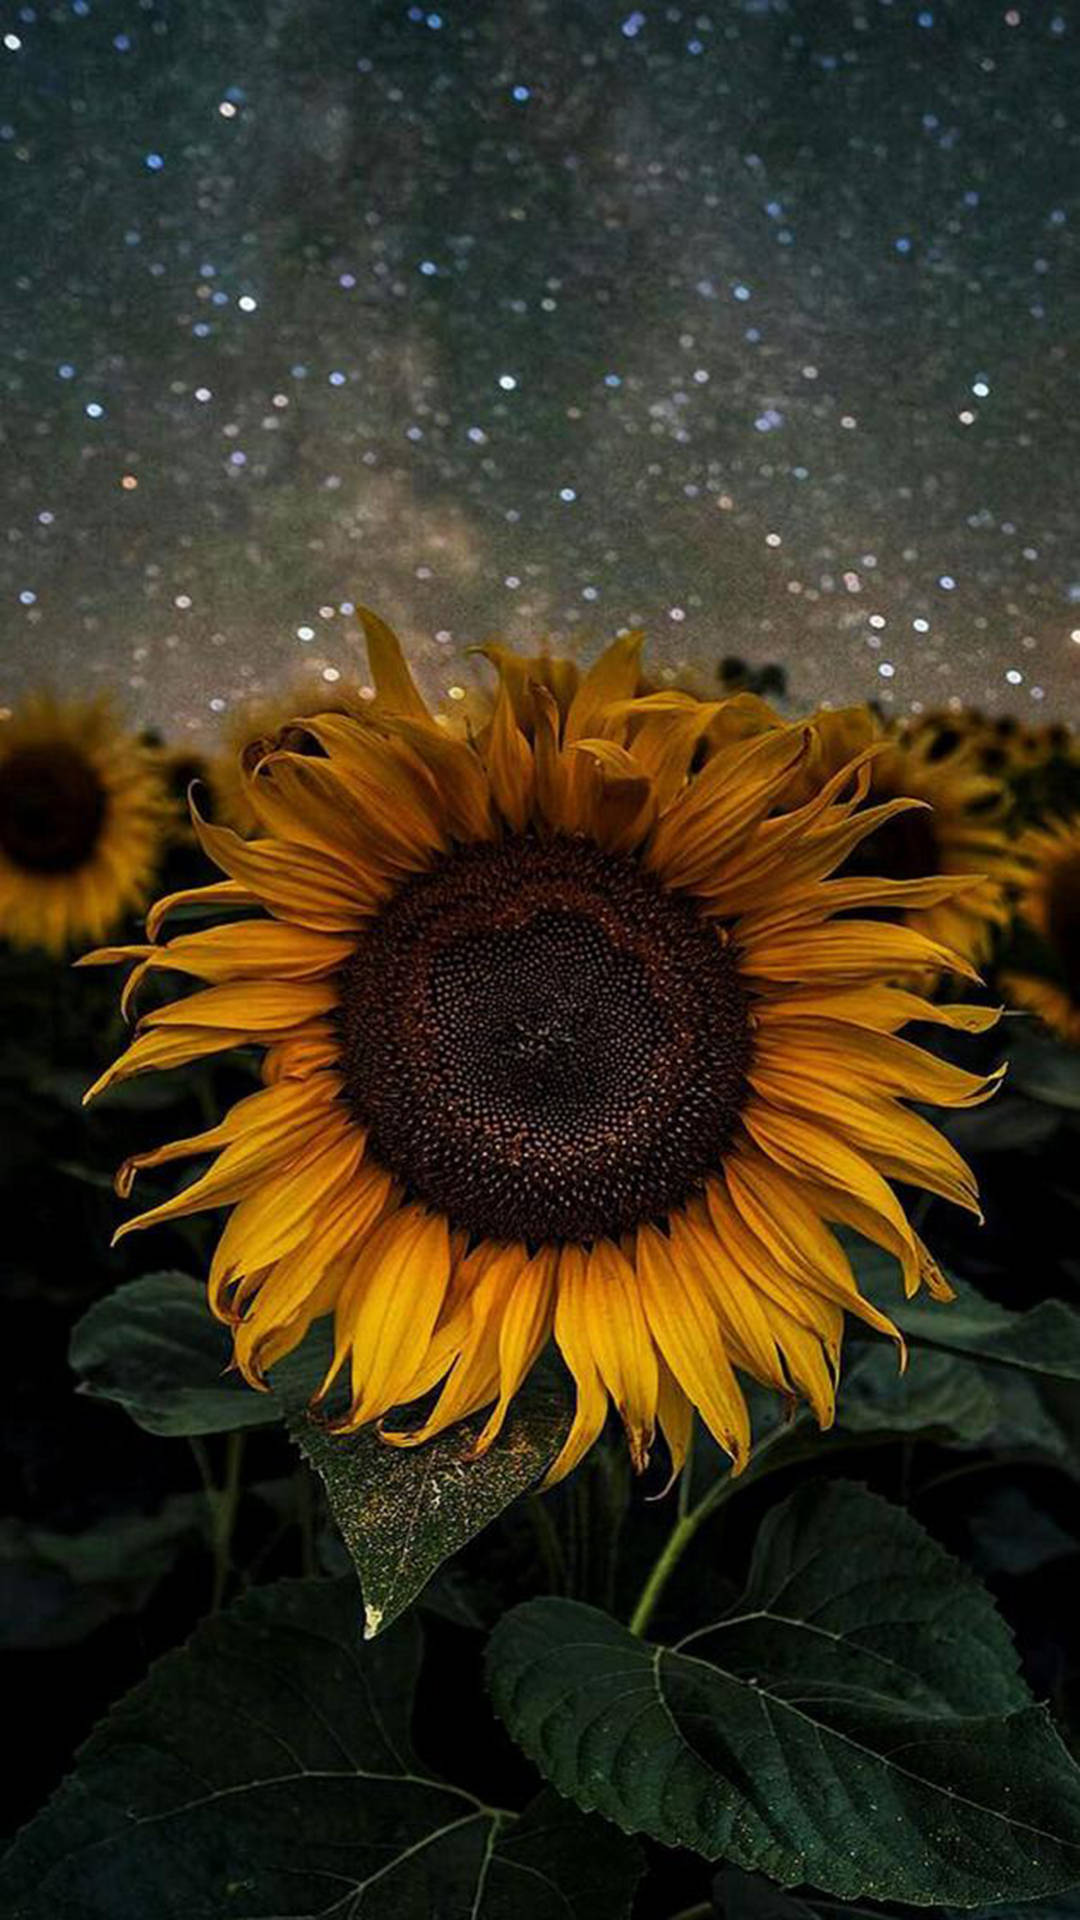 Aesthetic Sunflower Star Night Iphone Xr Wallpaper